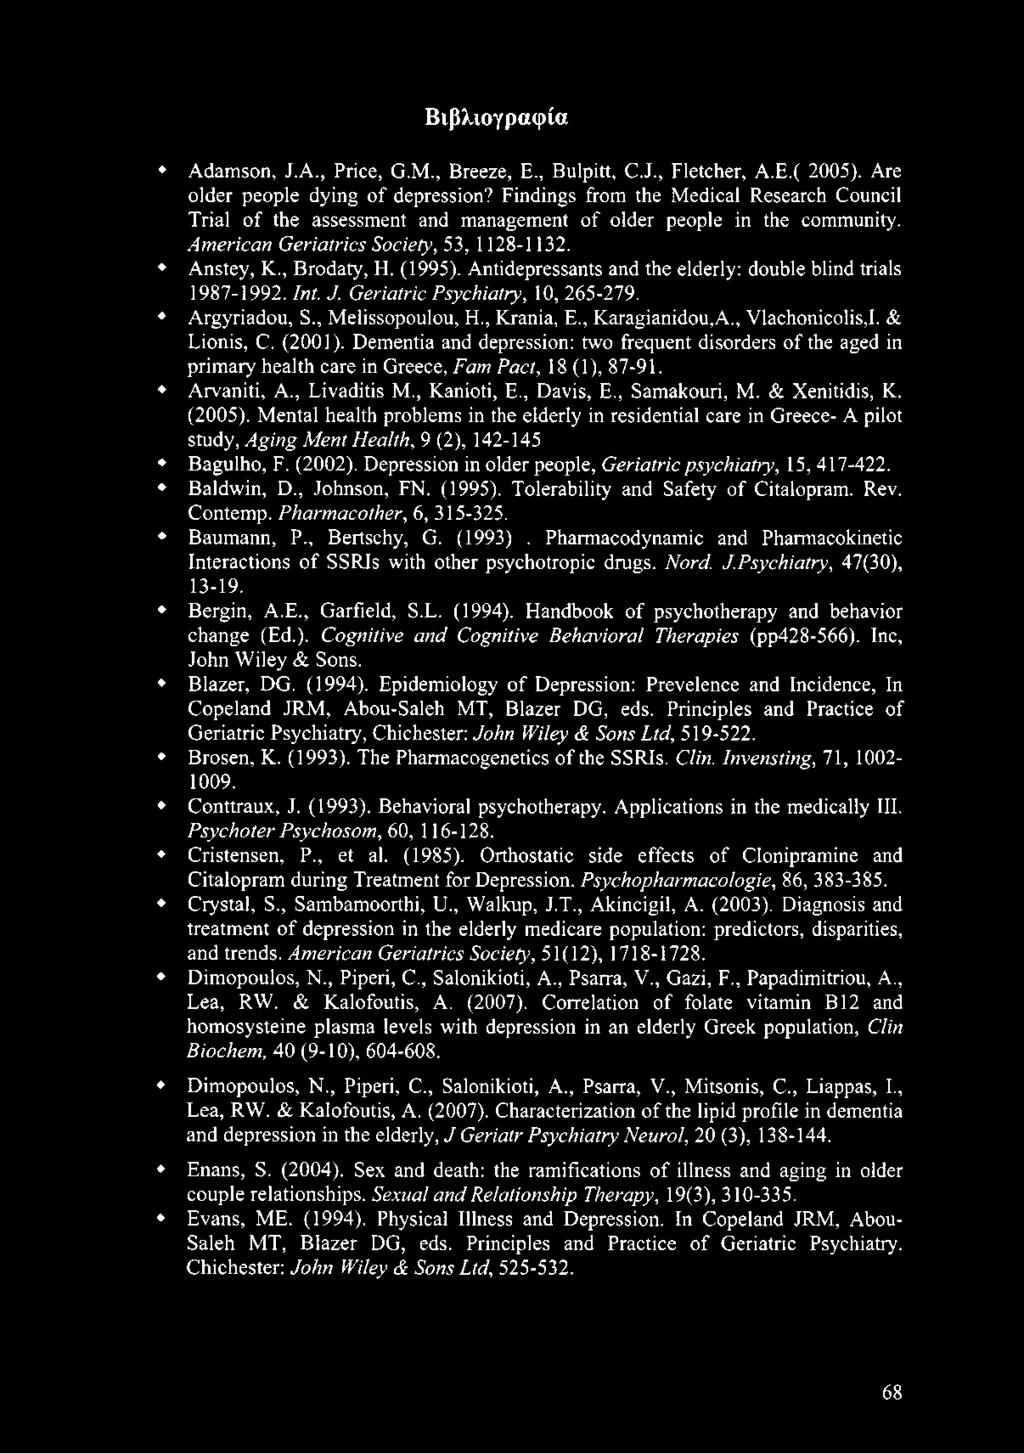 Antidepressants and the elderly: double blind trials 1987-1992. Int. J. Geriatric Psychiatry, 10, 265-279. Argyriadou, S., Melissopoulou, H., Krania, E., Karagianidou,A., Vlachonicolis,I. & Lionis, C.